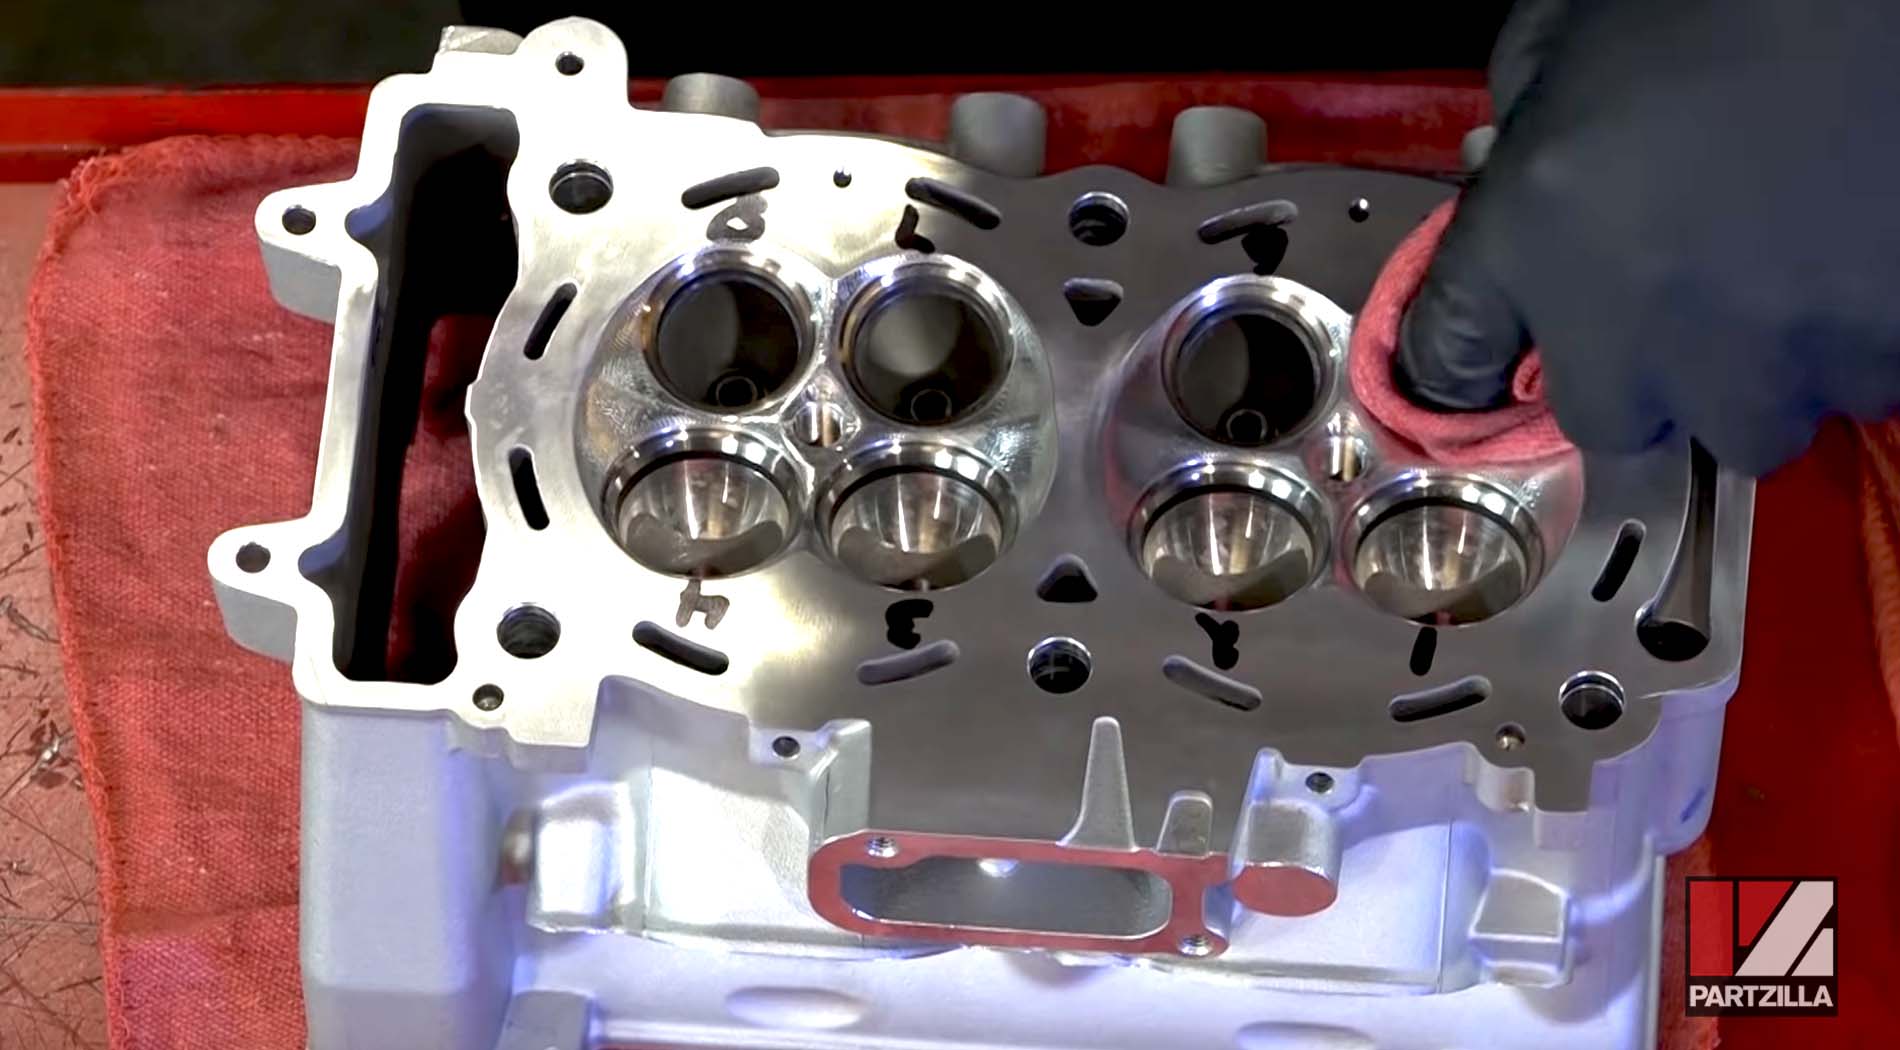 Polaris 900XP engine rebuild valve clearance adjustment